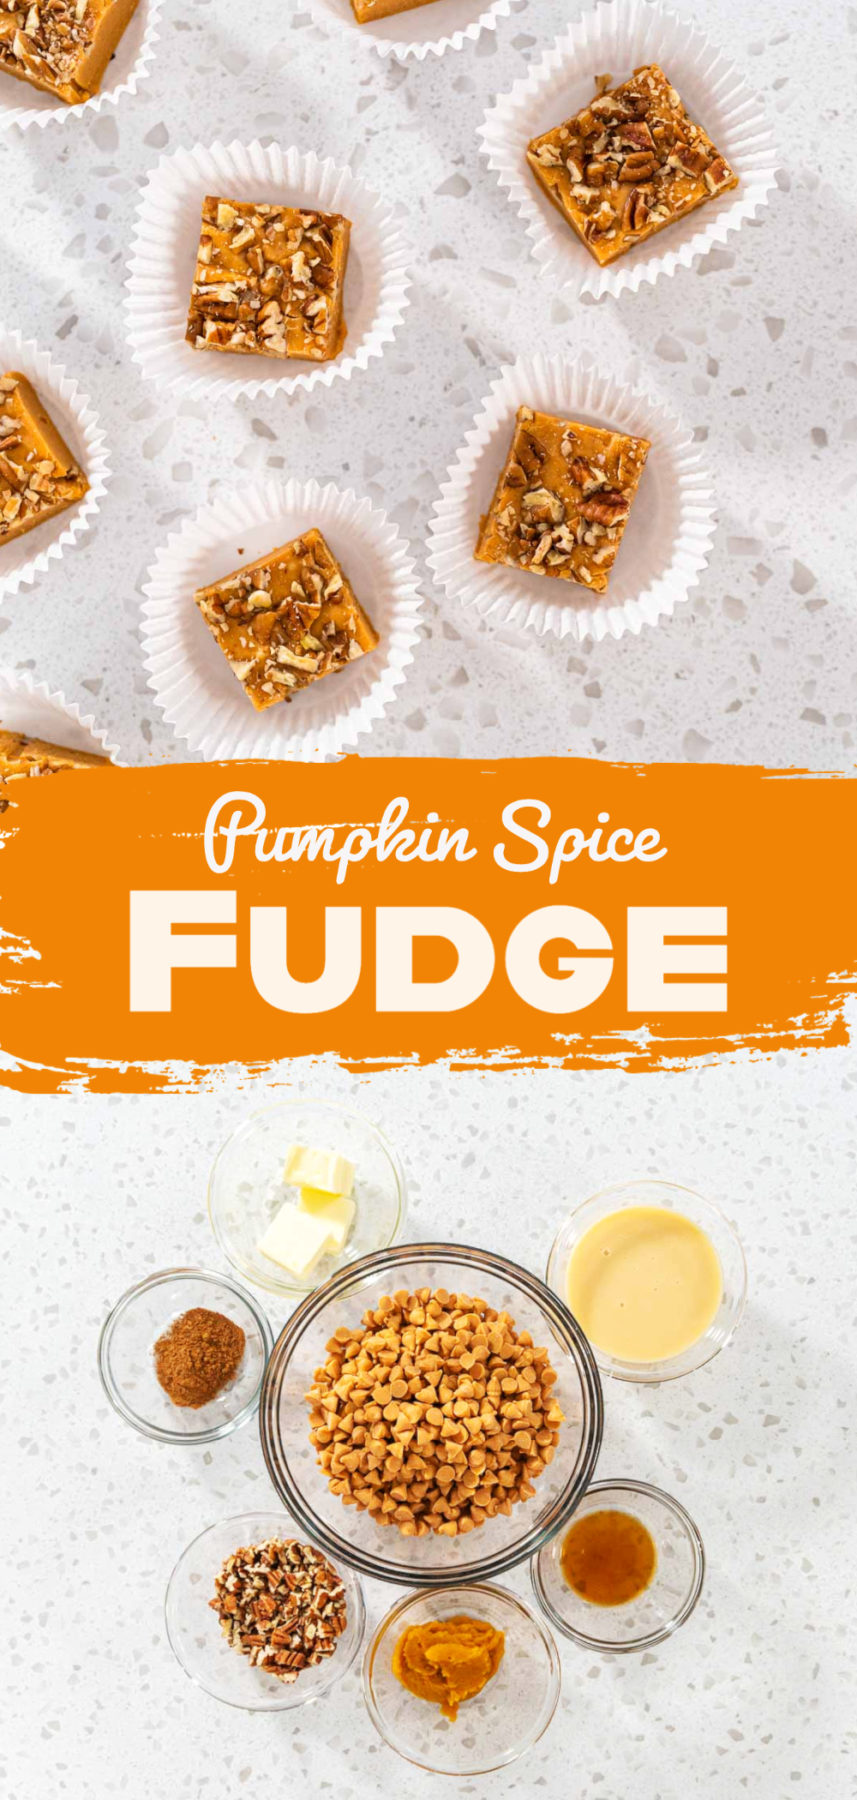 Pumpkin Spice Fudge